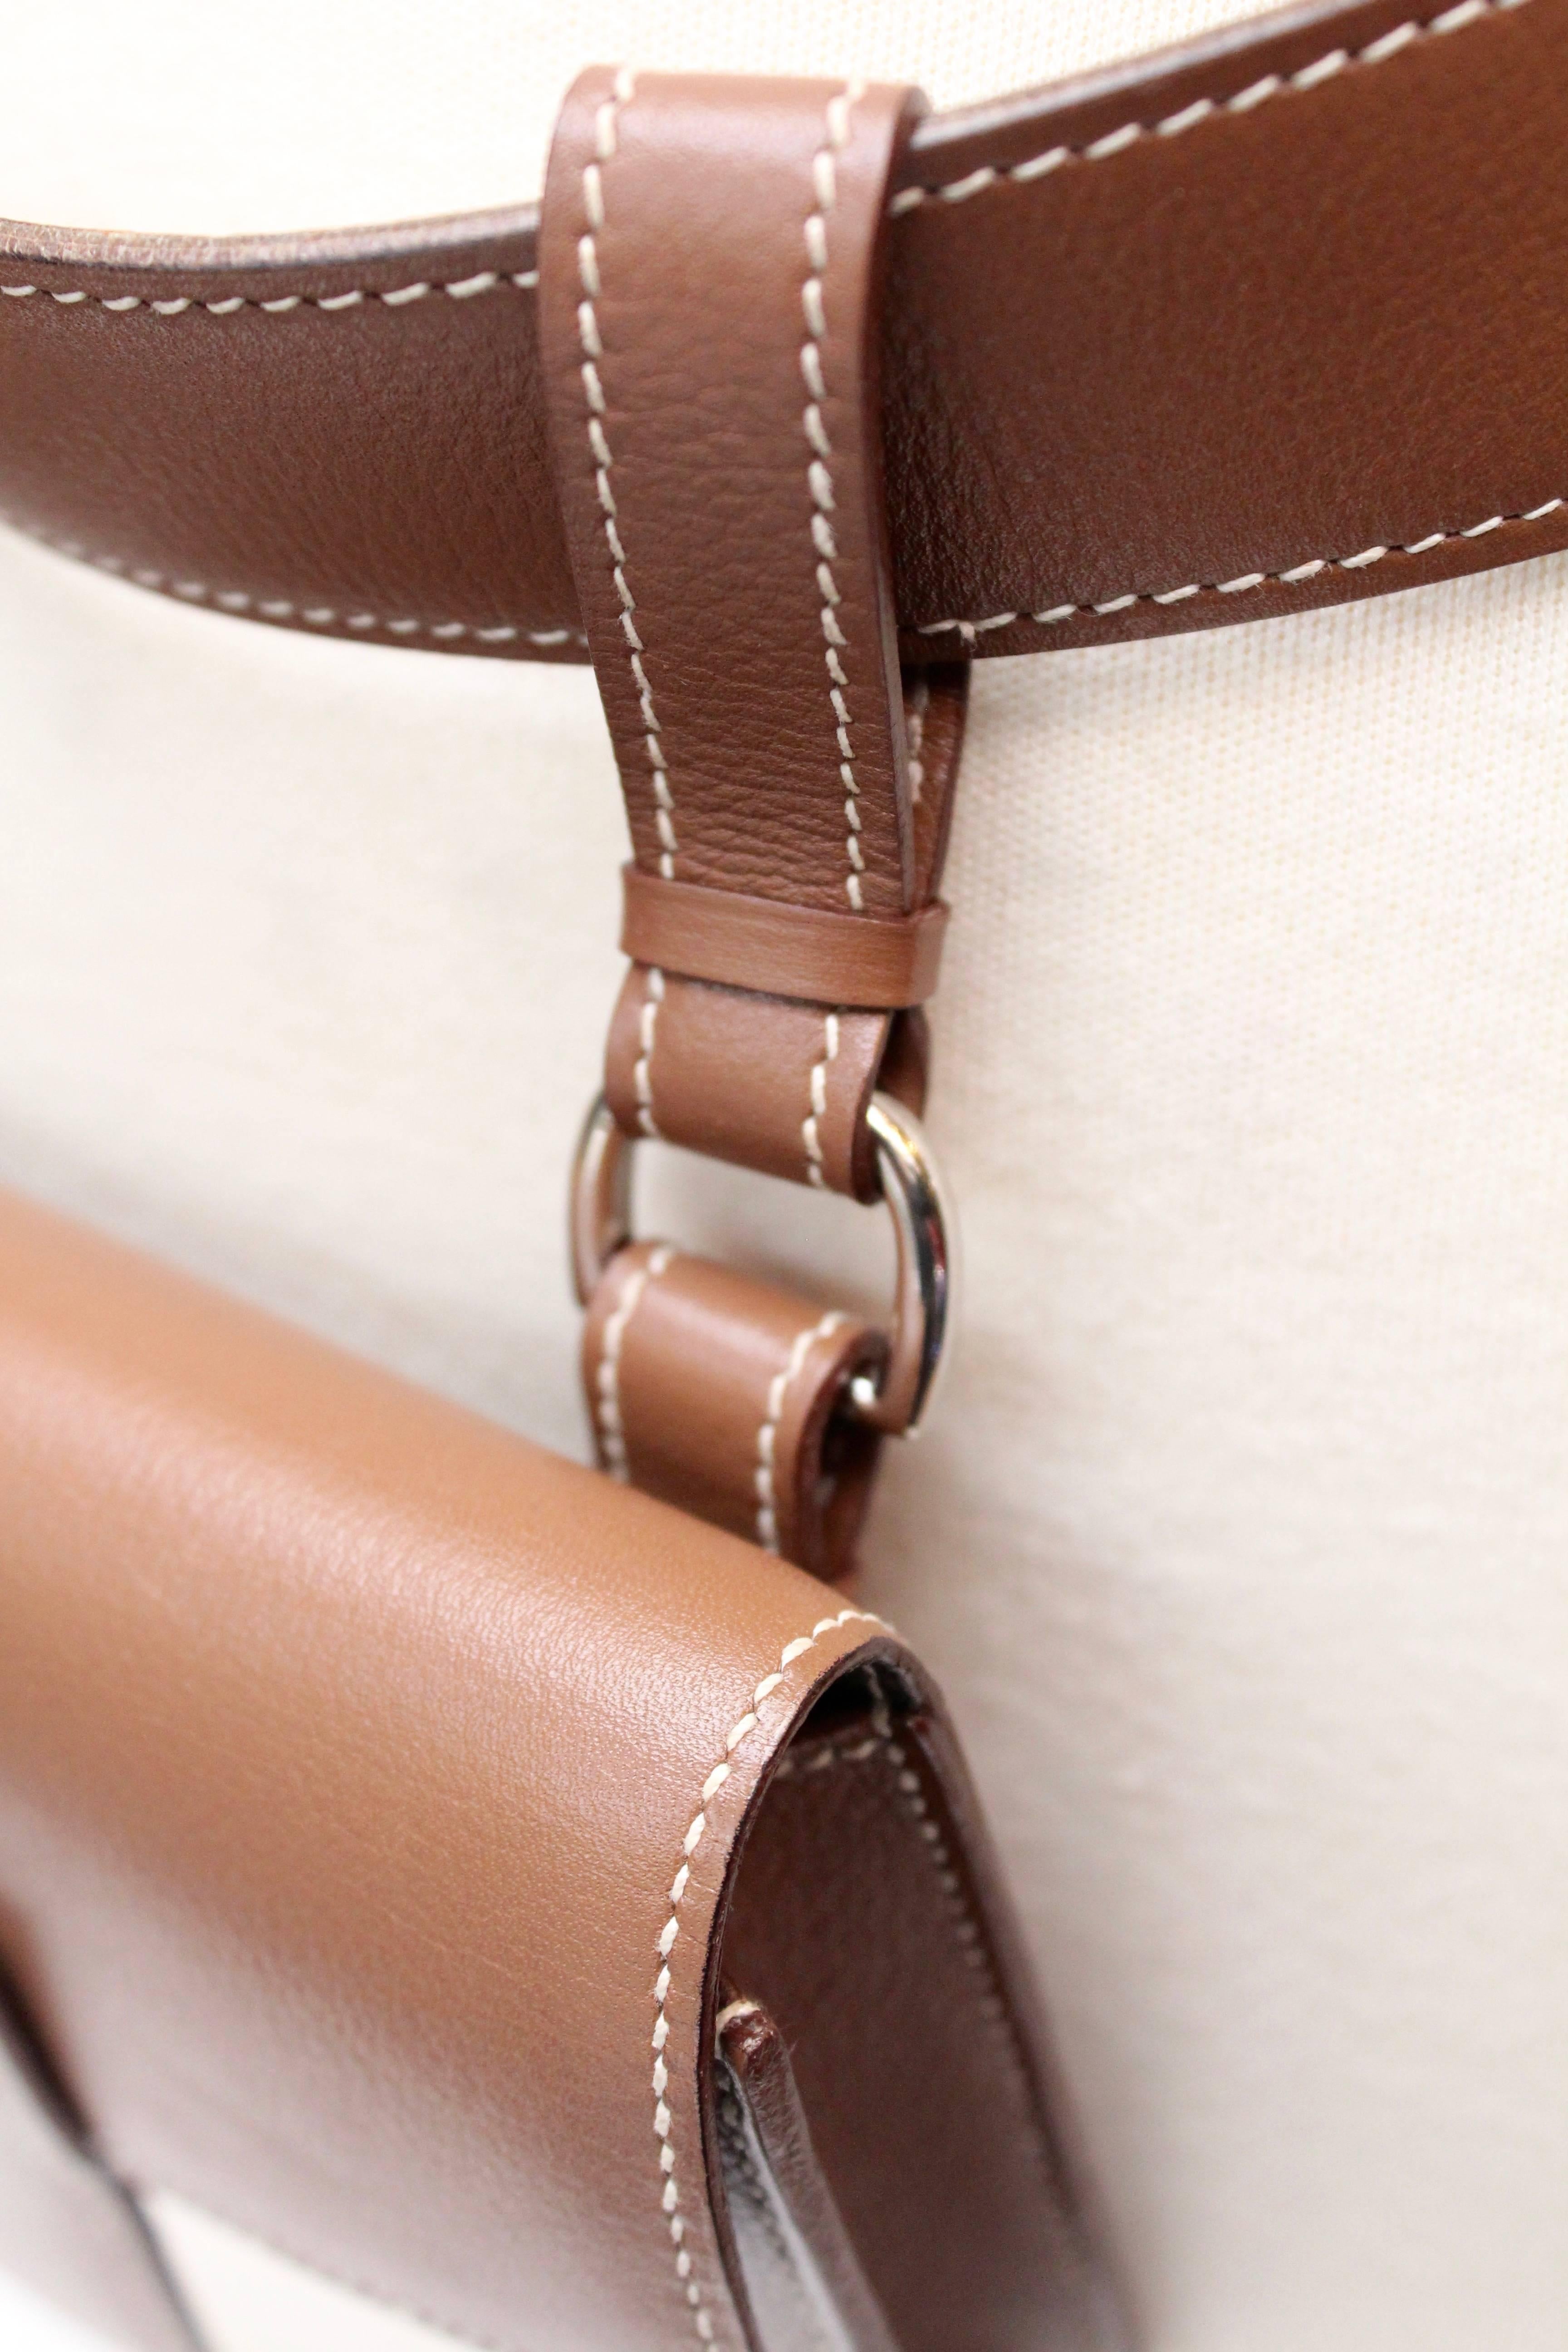 Hermès brown leather belt and clutch 2